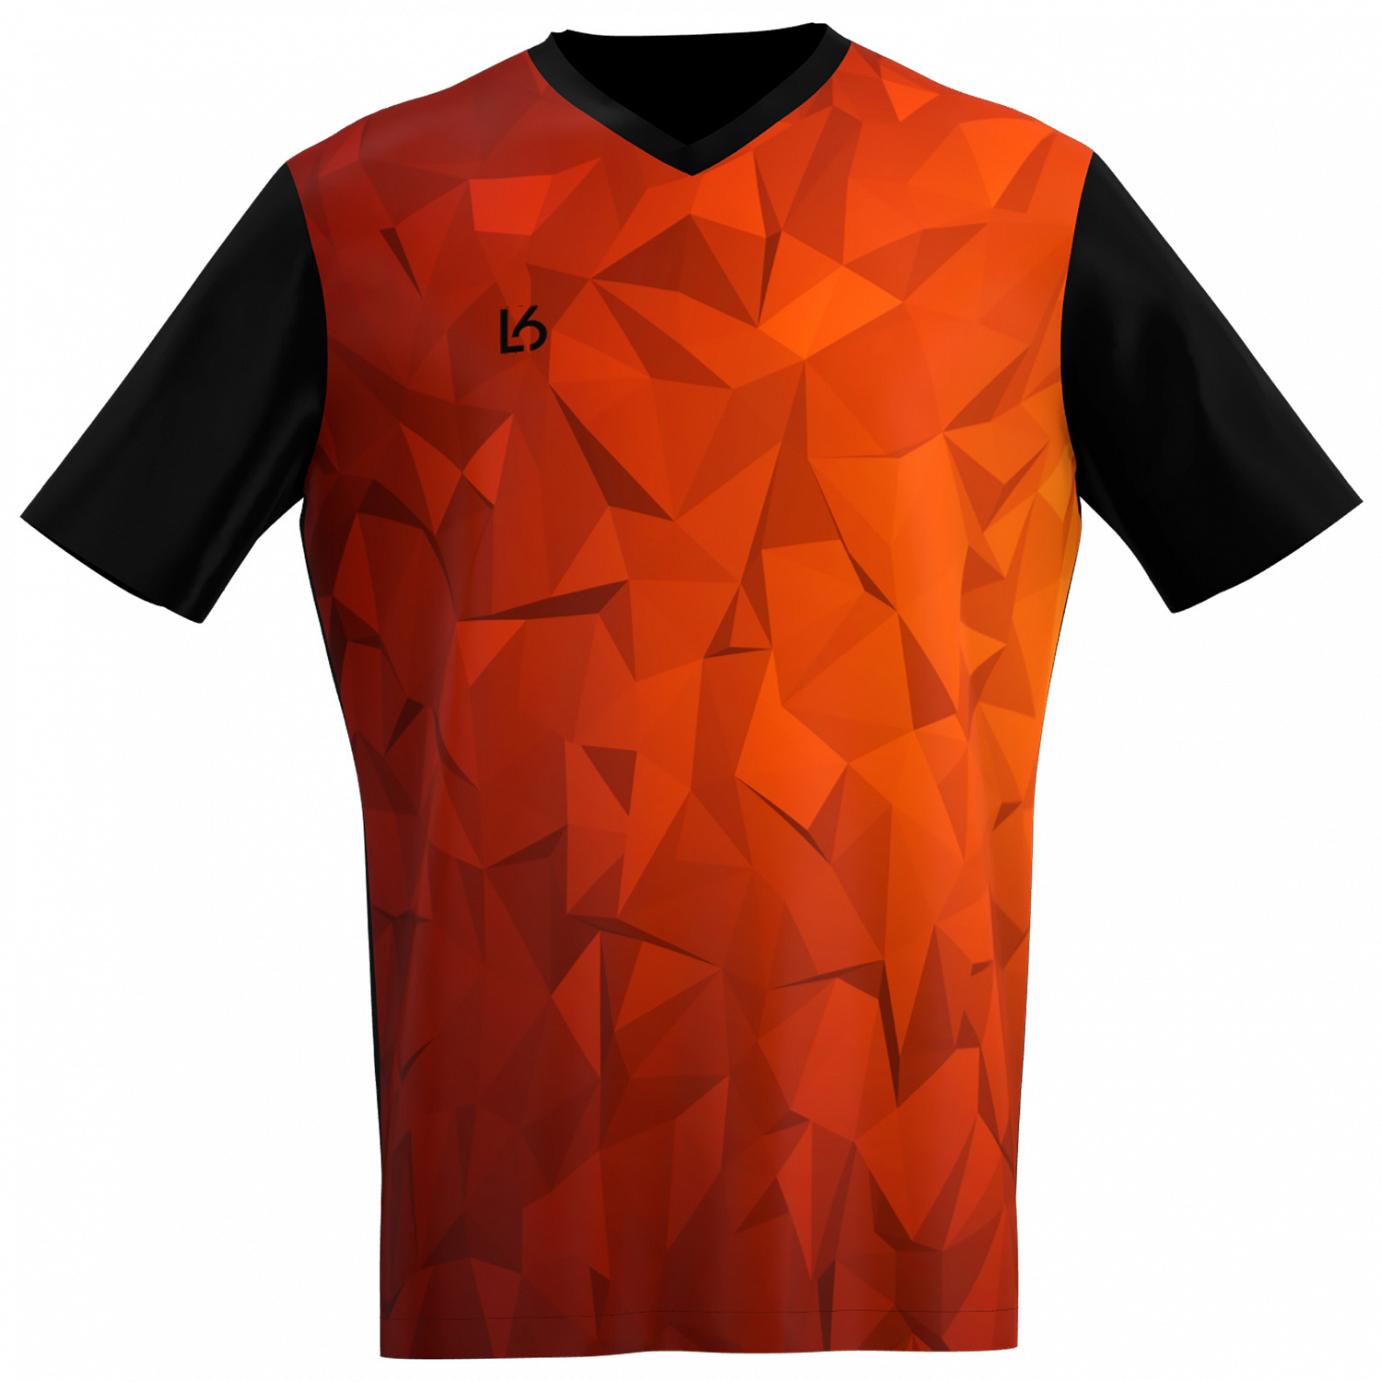 L6 V-Neck Trikot Uni- Polygon Orange - Badminton Shop Franken